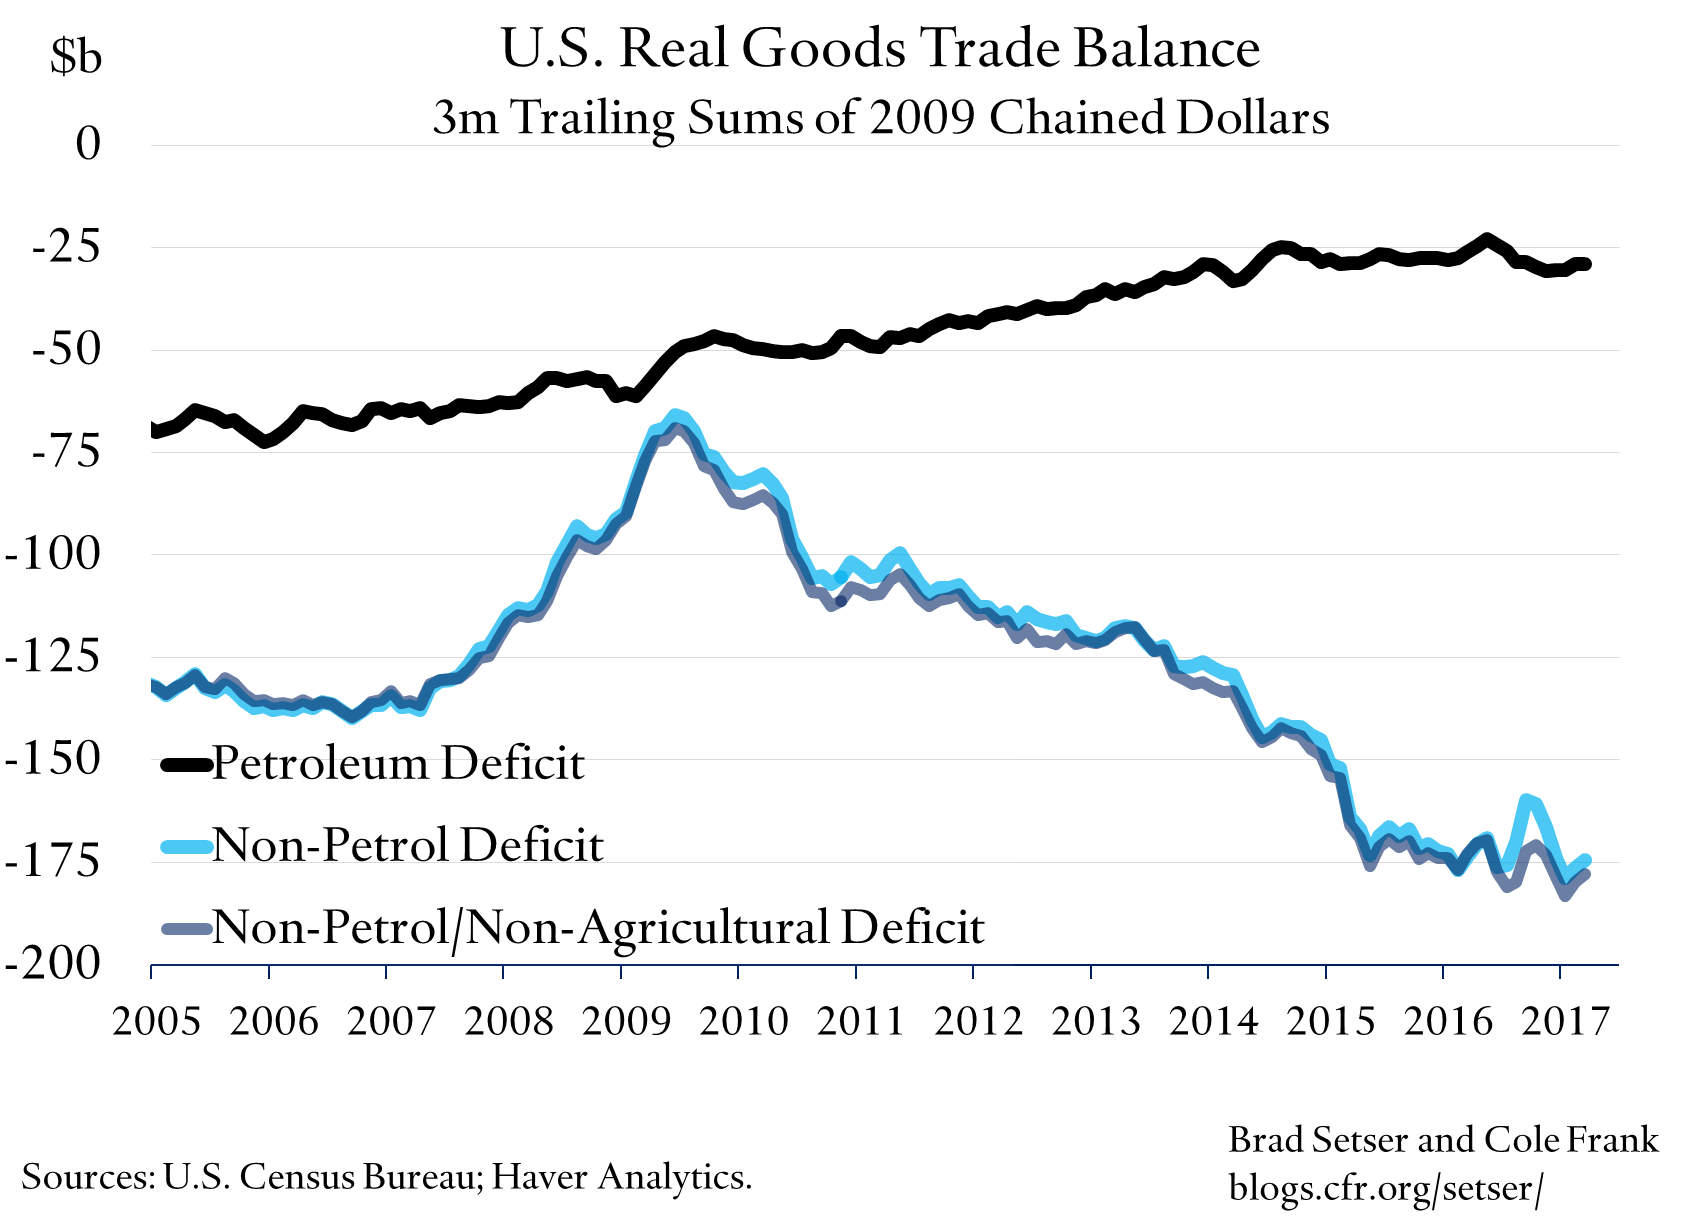 U.S. Trade Deficit Stable in Q1